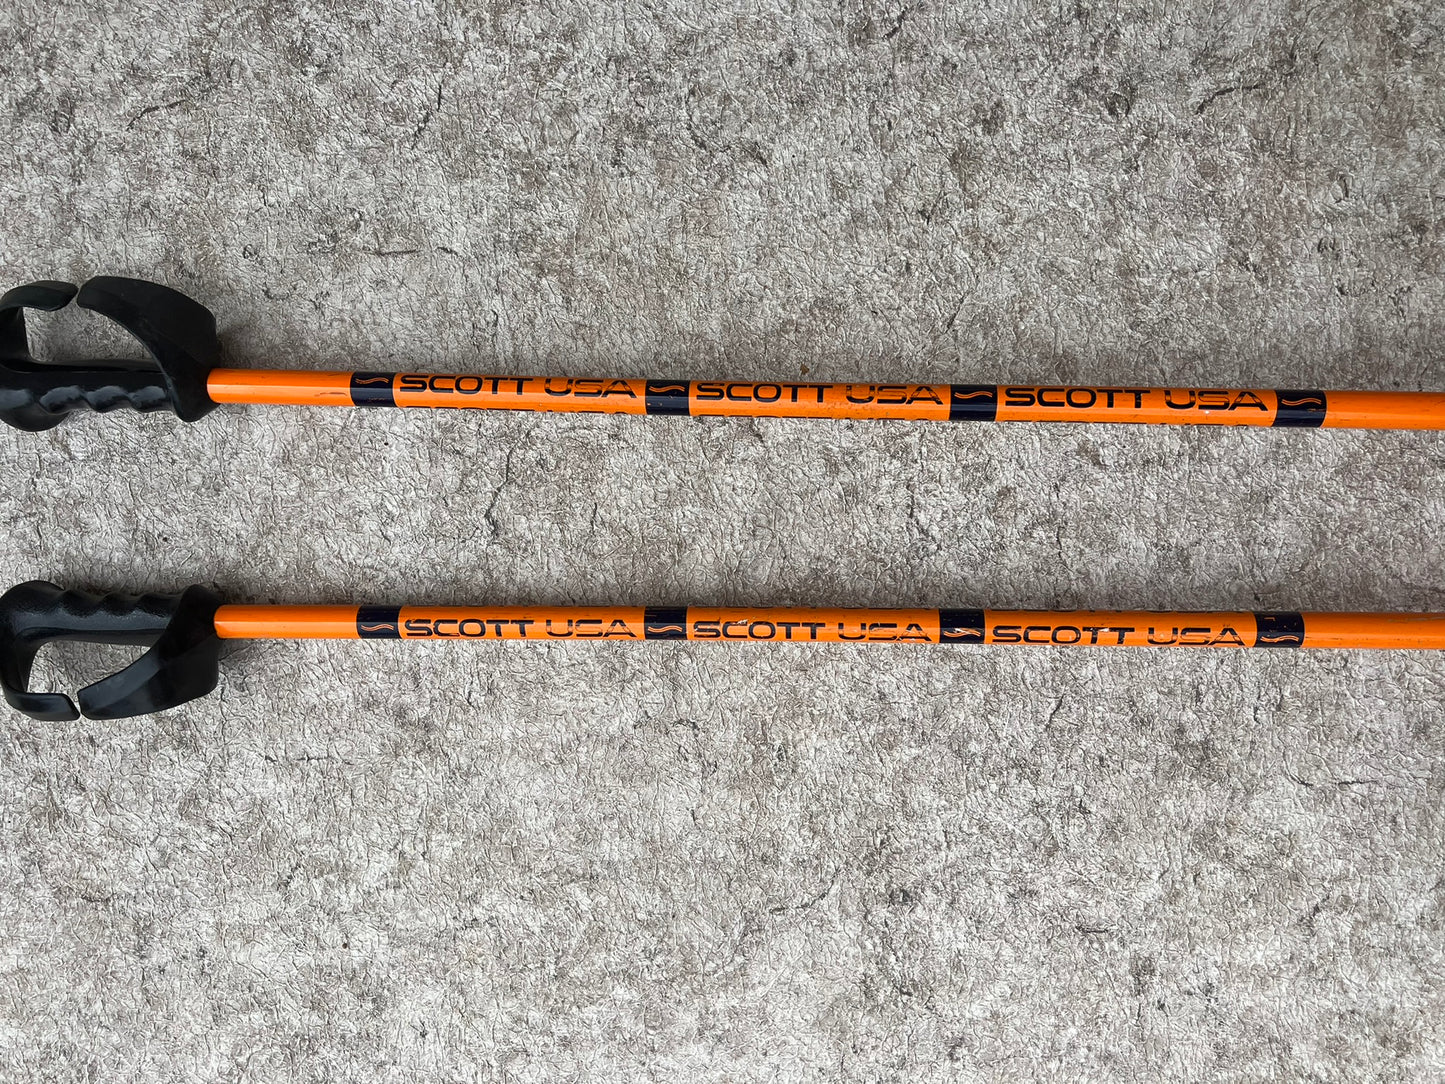 Ski Poles Adult Size 50 inch 125 cm Scott USA Orange Black Excellent